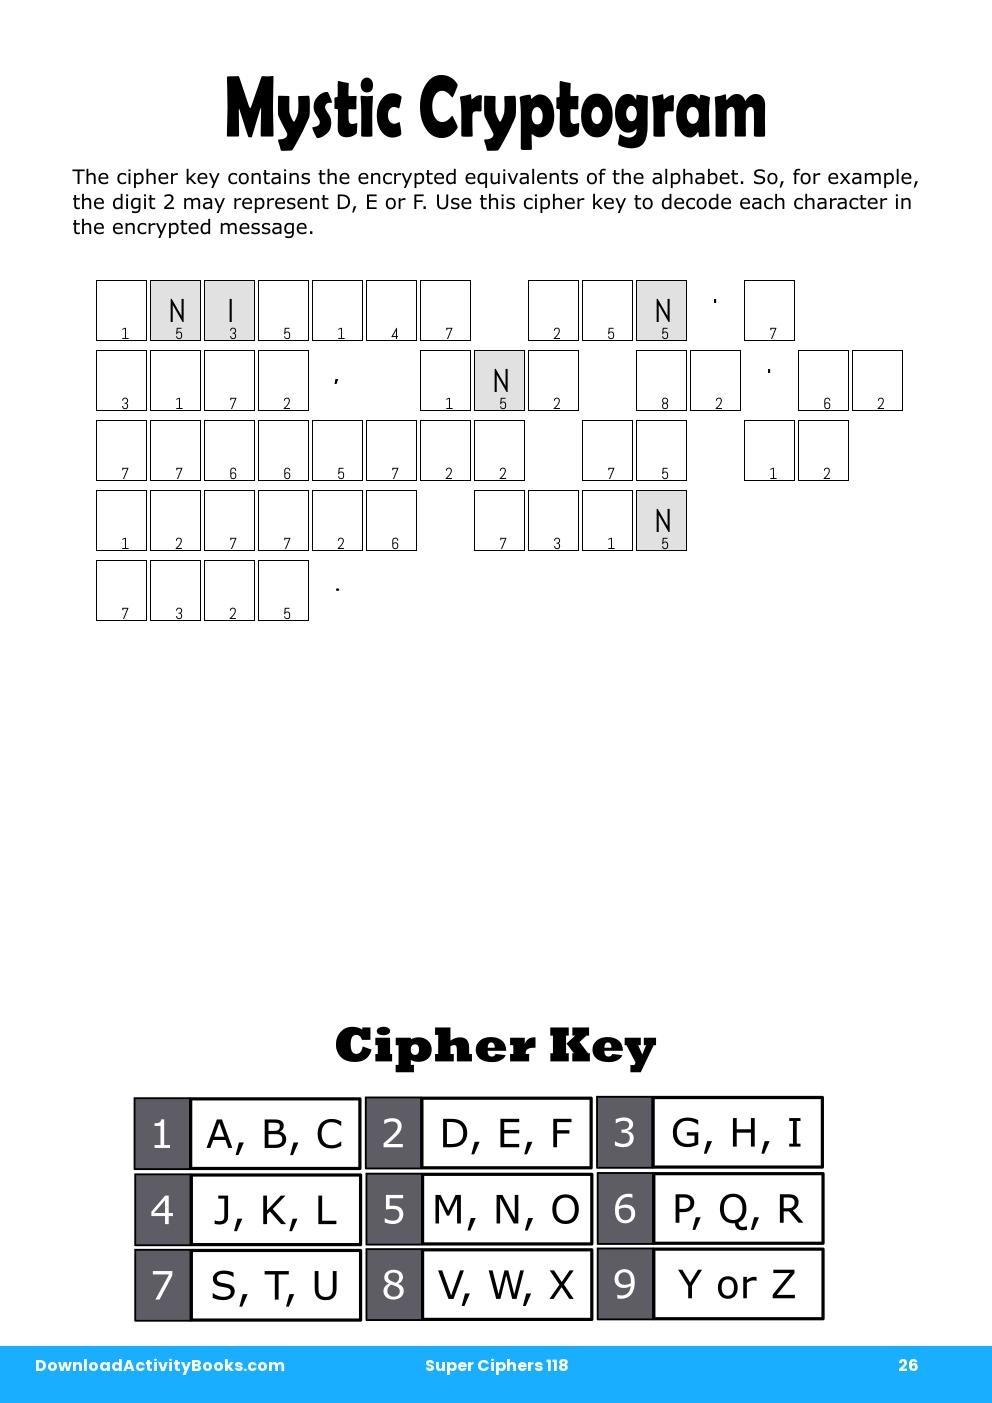 Mystic Cryptogram in Super Ciphers 118